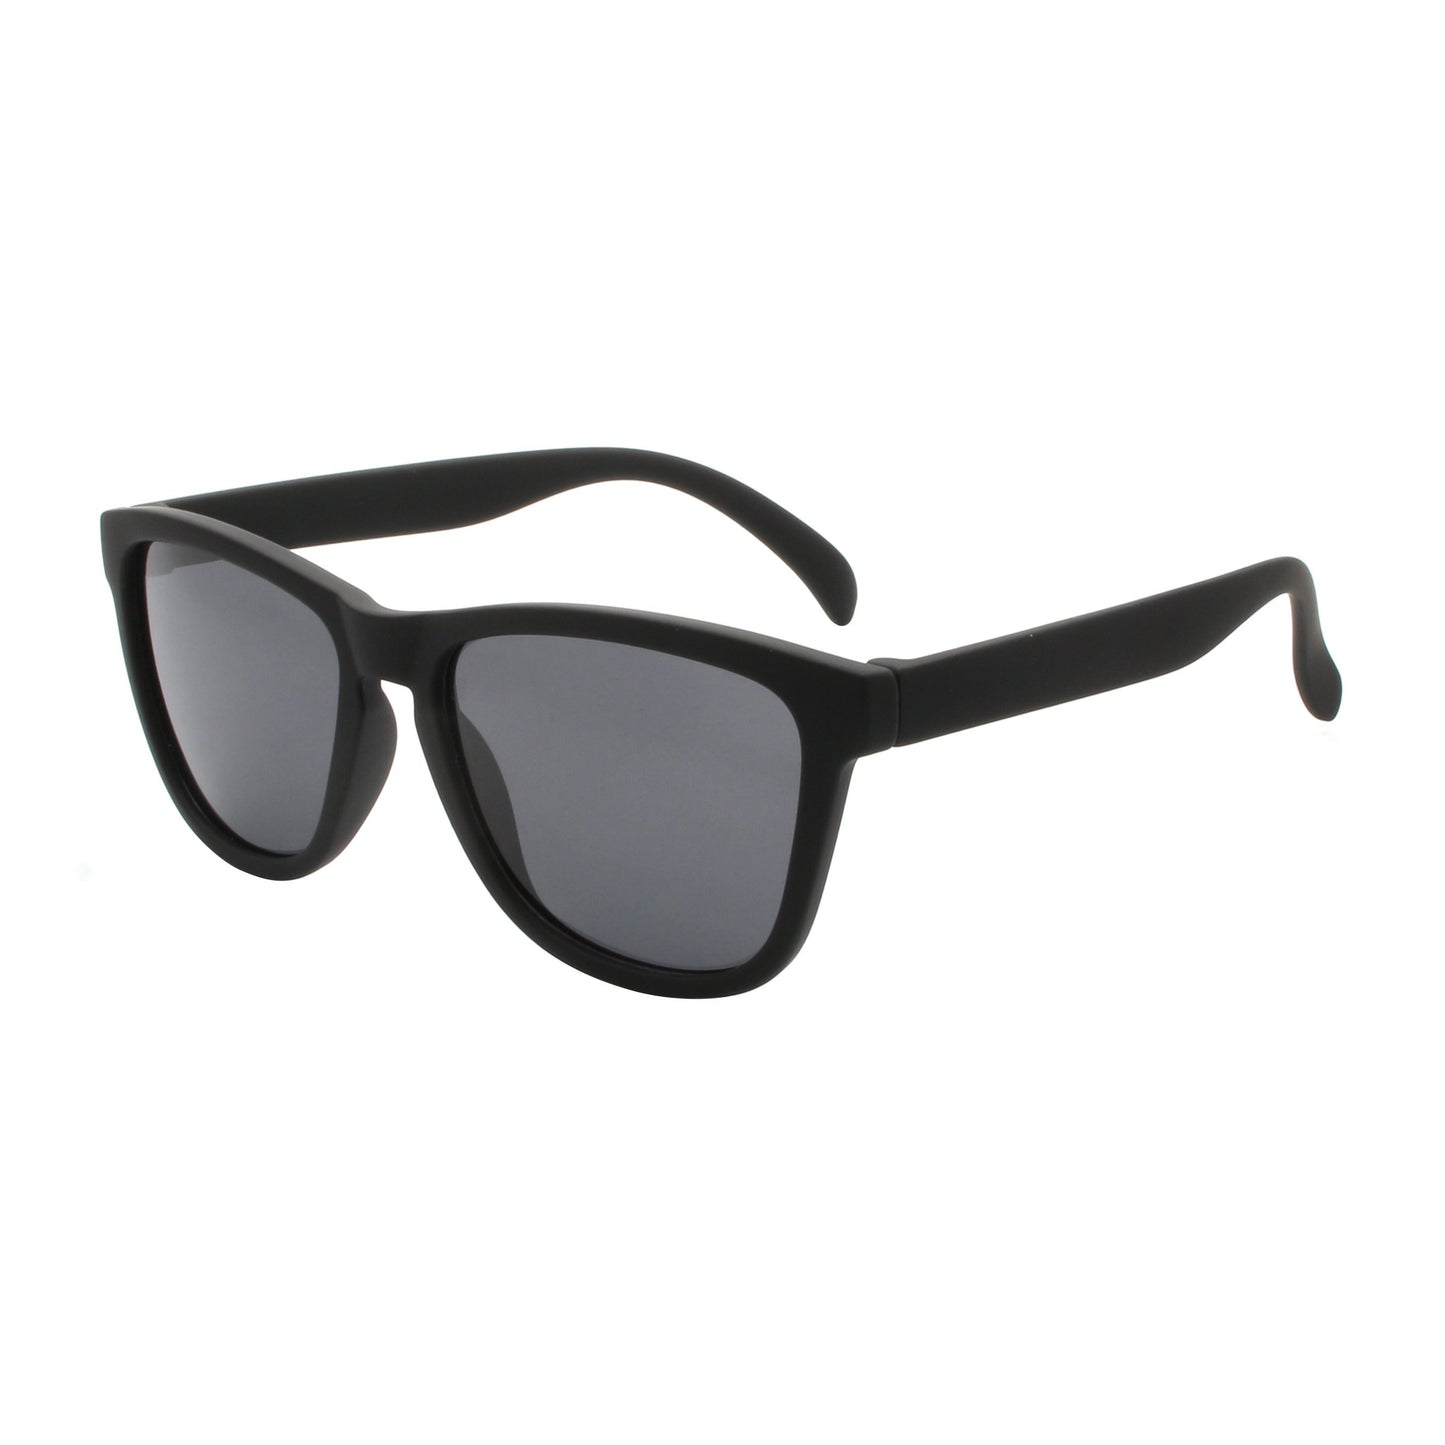 Side  view of the black Polarized Original Heny Sunglasses